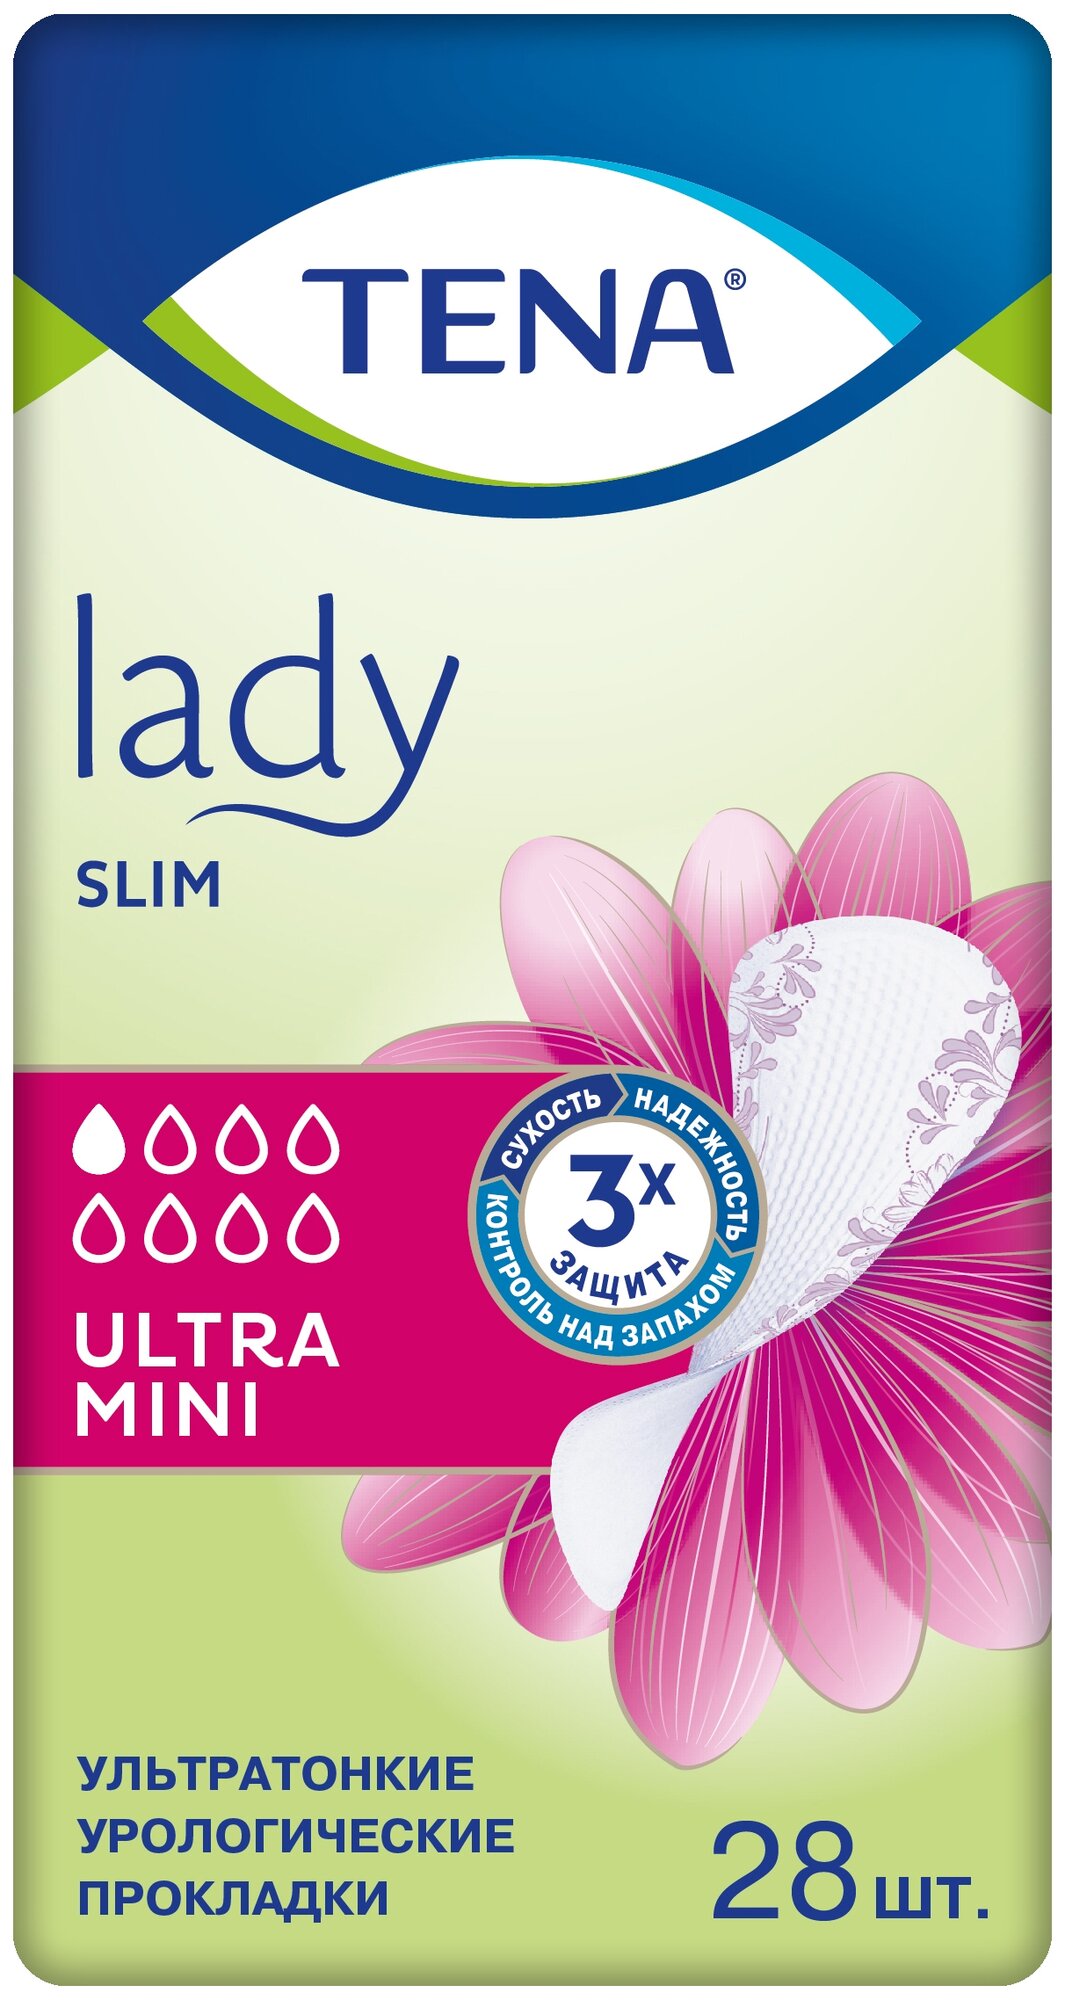 Урологические прокладки TENA (Тена) Lady Slim Ultra Mini 14 шт. SCA Hygiene Products spol. s.r.o. - фото №1